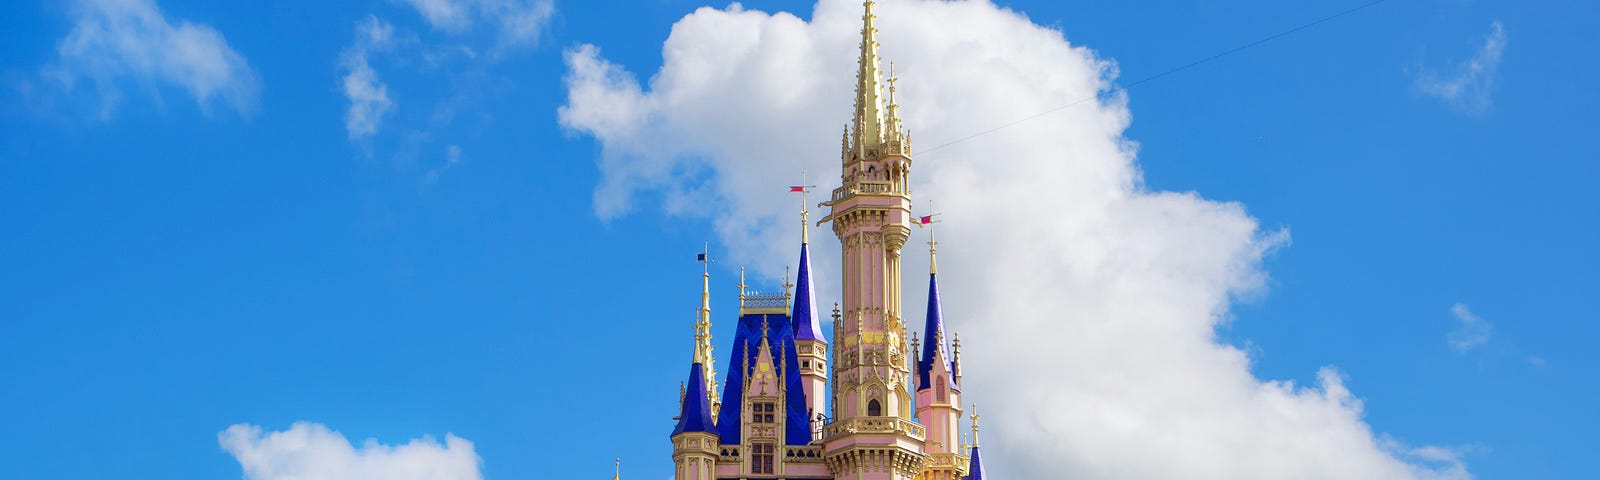 Cinderella Castle at Walt Disney World, Orlando FL